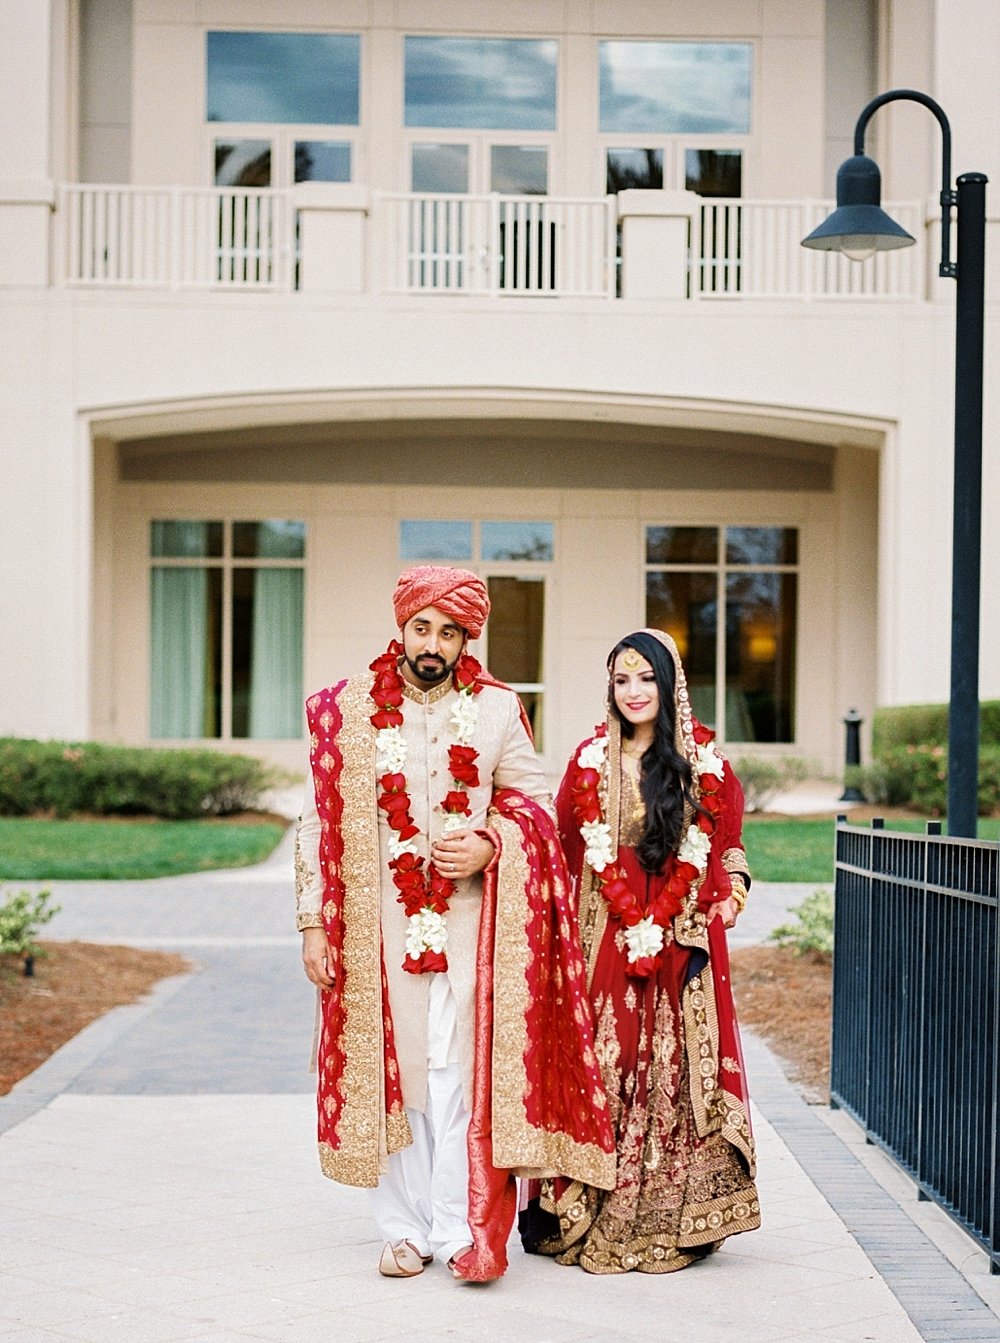 Indian Wedding Hilton Bonnet Creek Waldorf Astoria Orlando FL - Mamiya 645 afd - Film Photography | Ashley Holstein Photography #portra 400